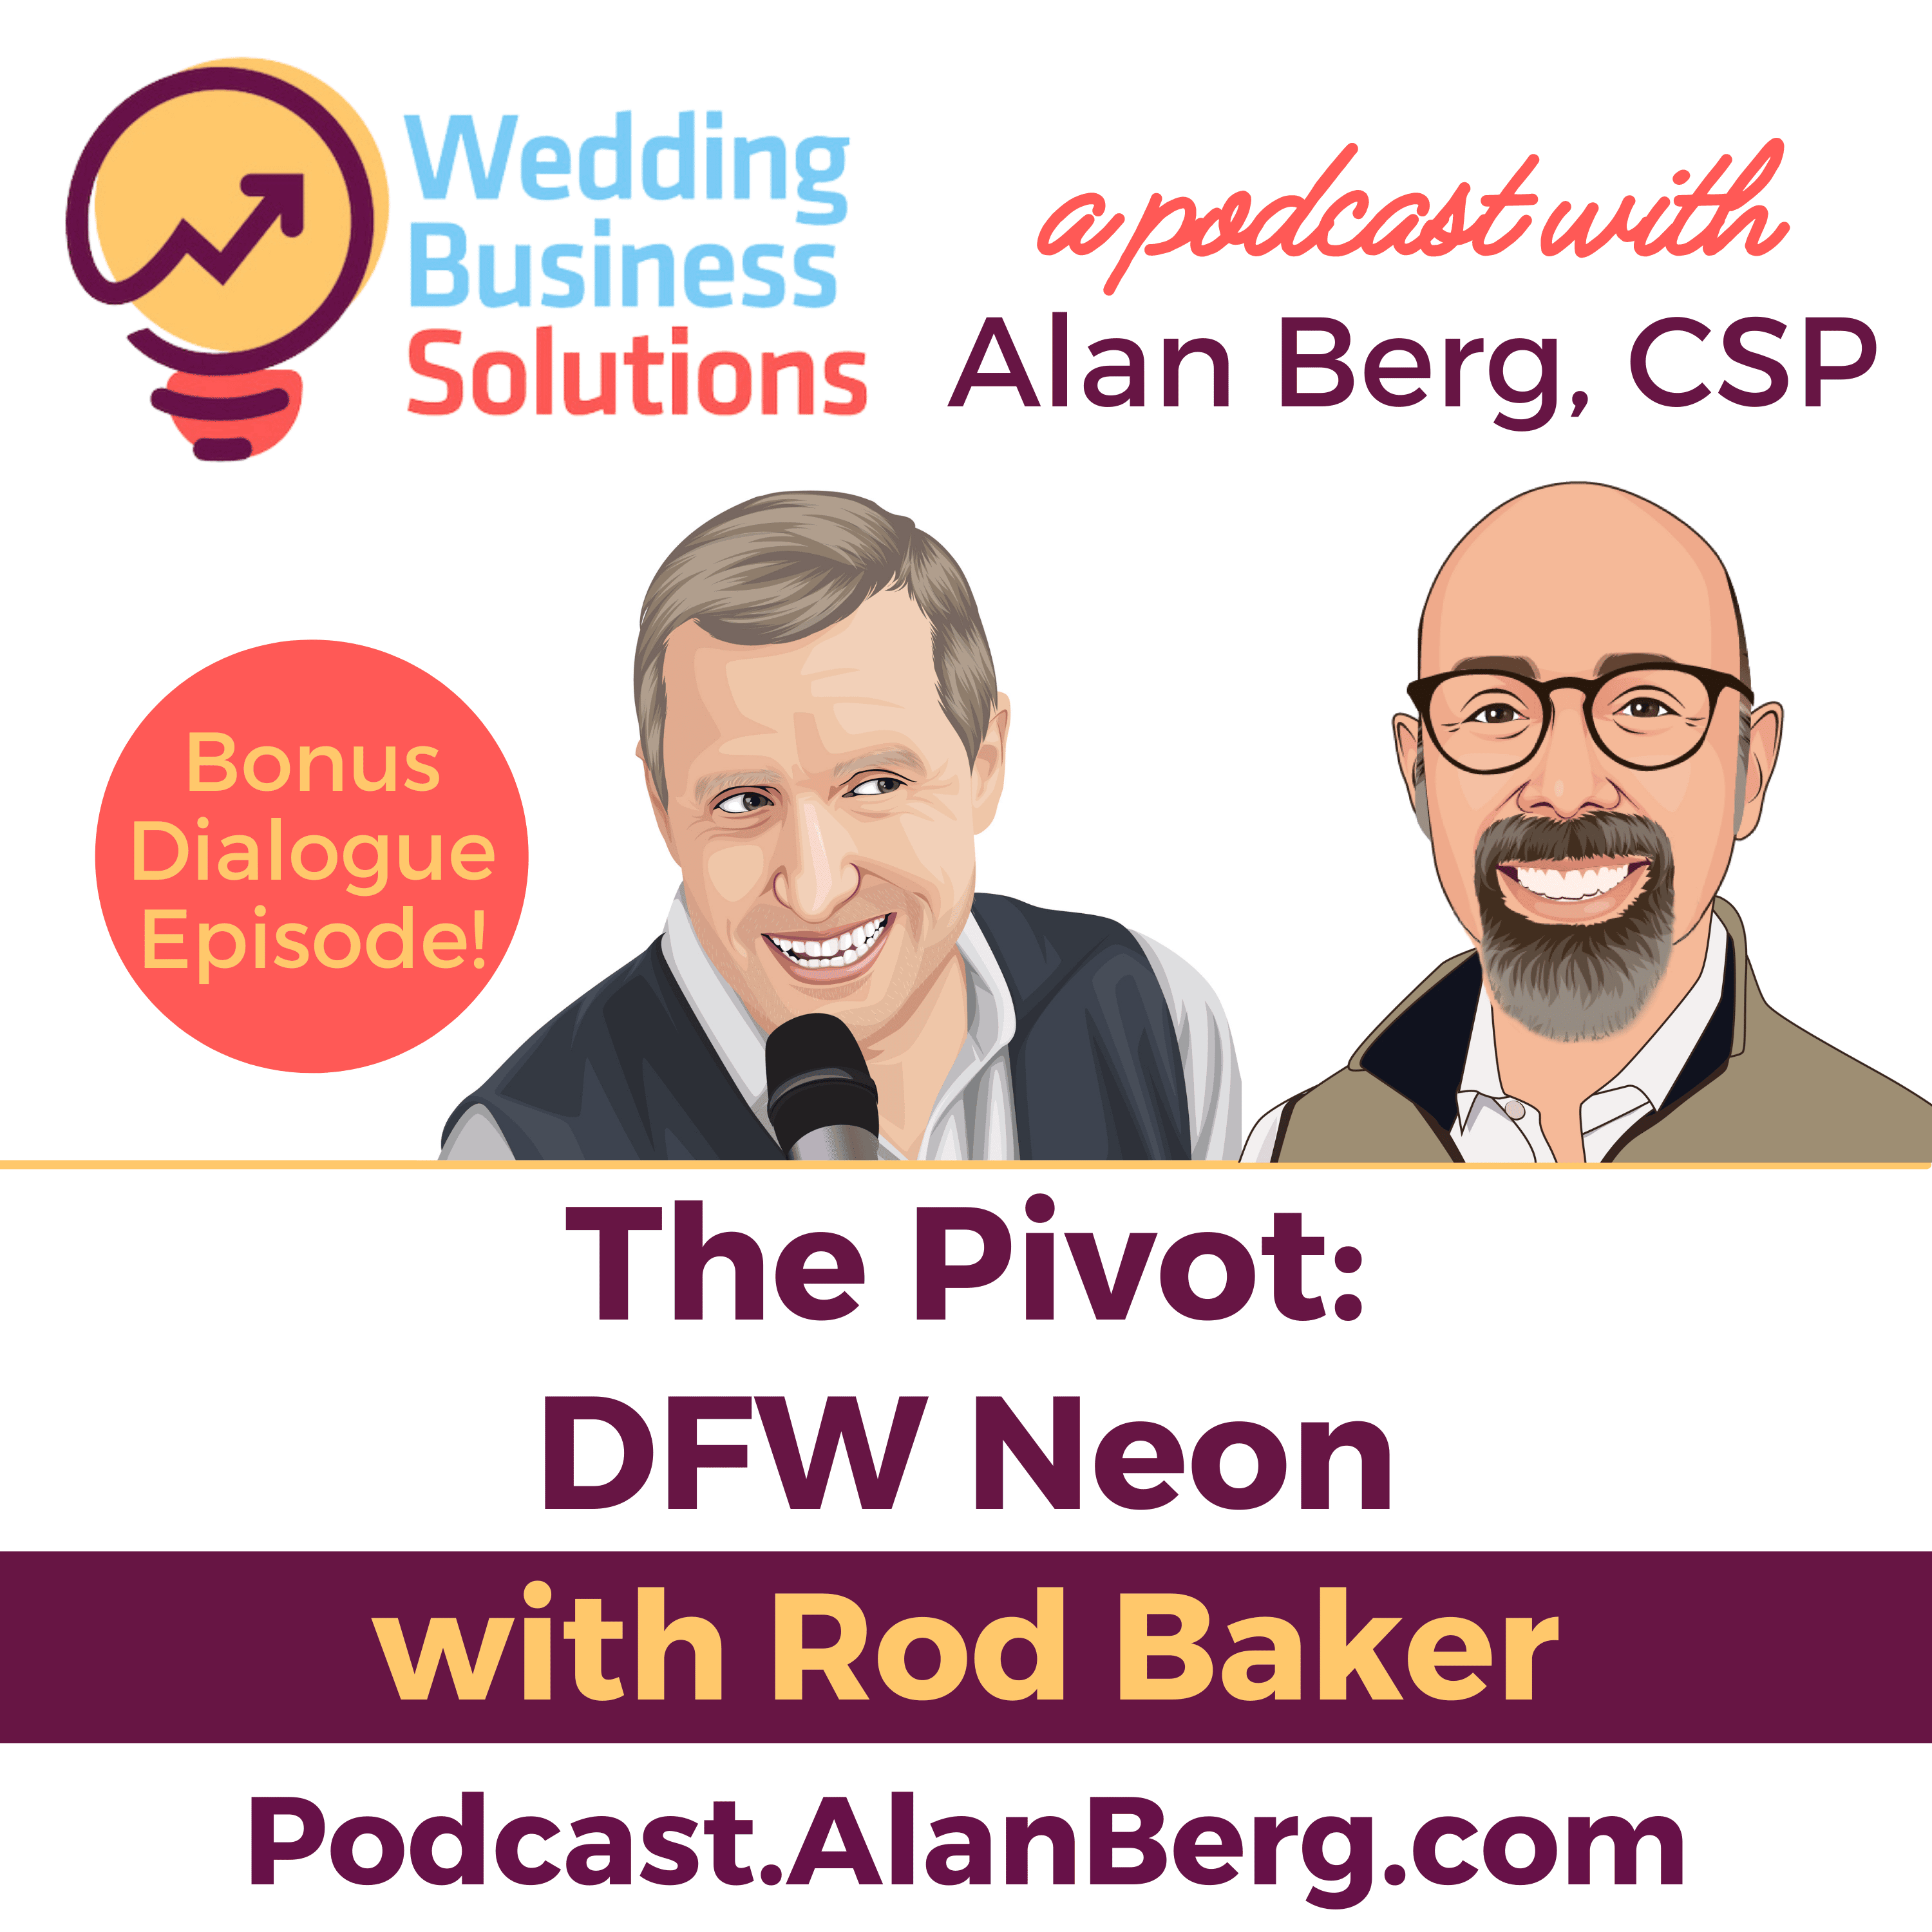 Rod Baker - his Pivot DFW Neon - Alan Berg CSP, Wedding Business Solutions Podcast